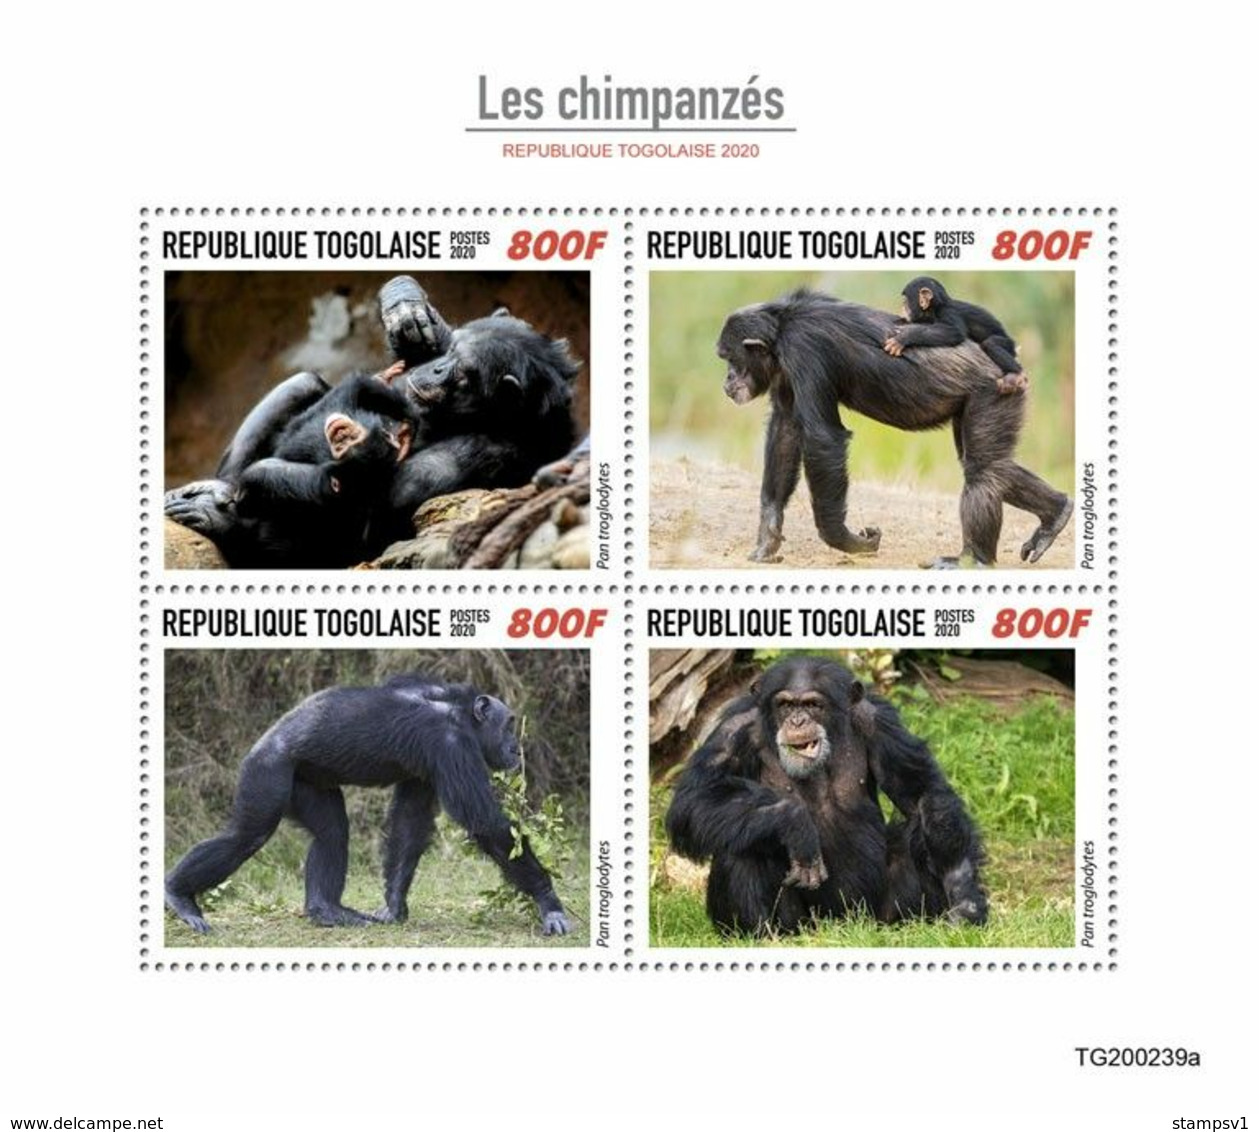 Togo 2020 Chimpanzees. (0239a) OFFICIAL ISSUE - Chimpanzees